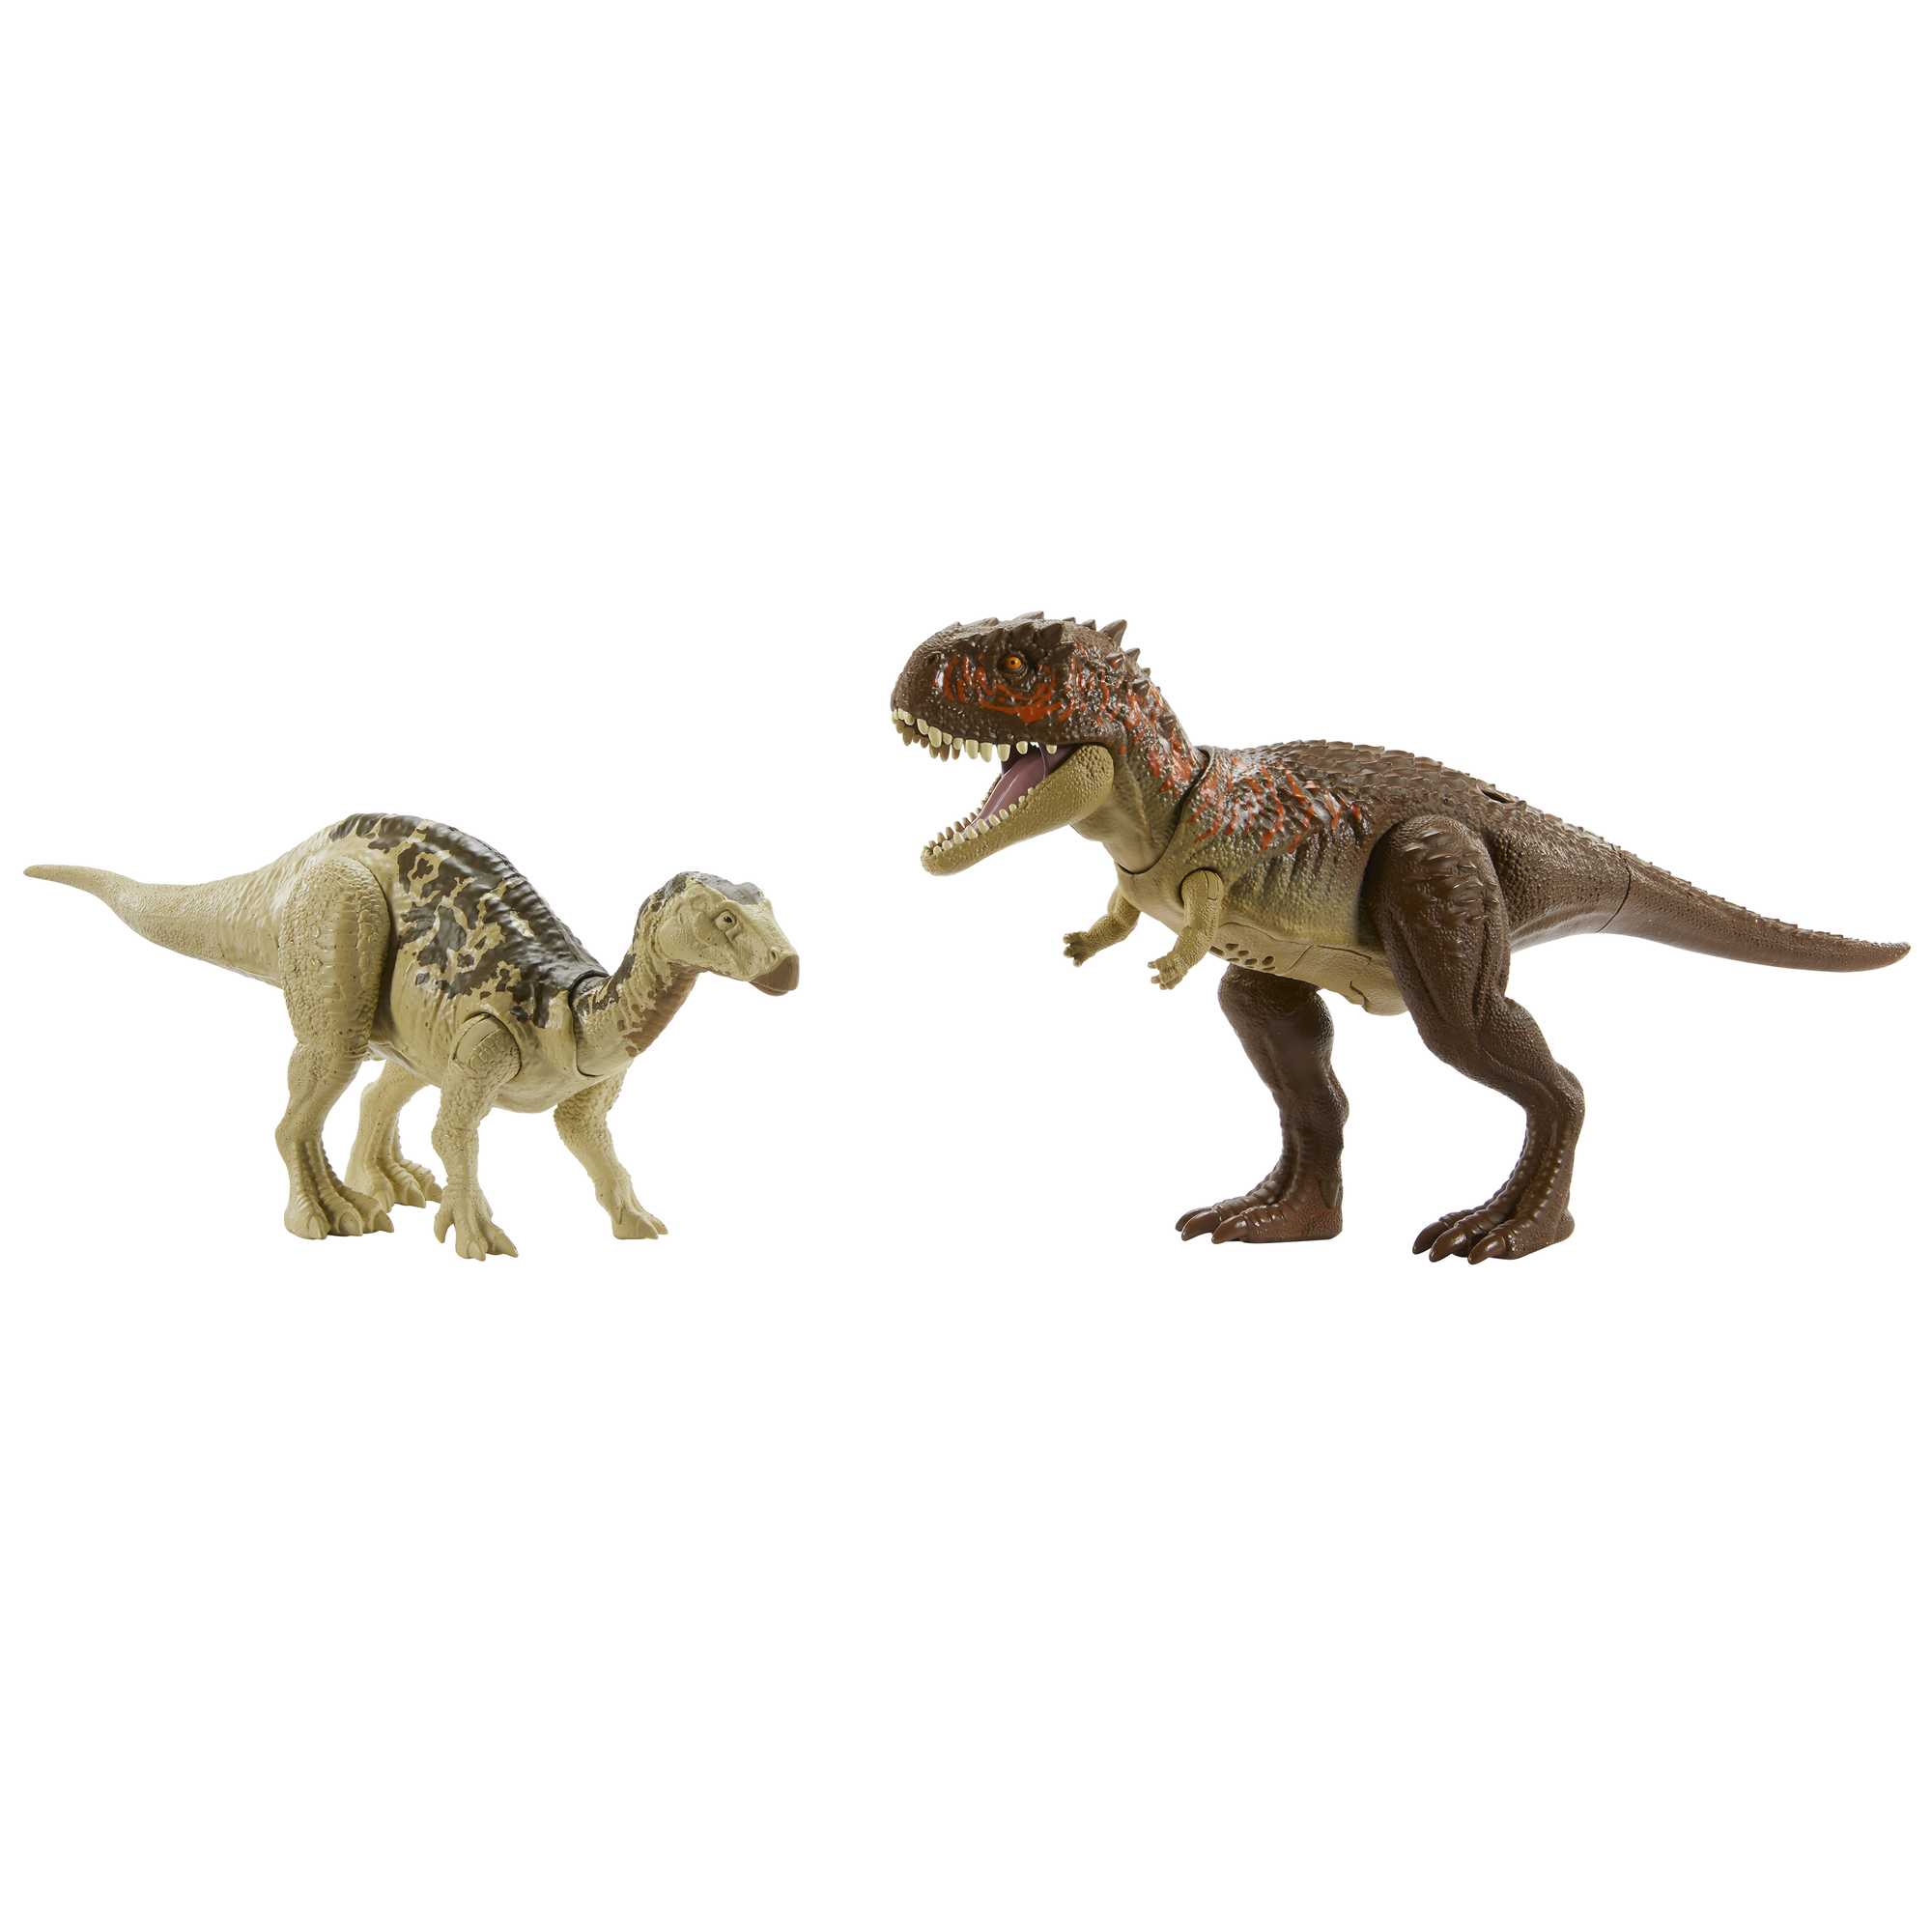 Jurassic world - dryptosaurus sonore - figurine dinosaure - 4 ans et +  Mattel